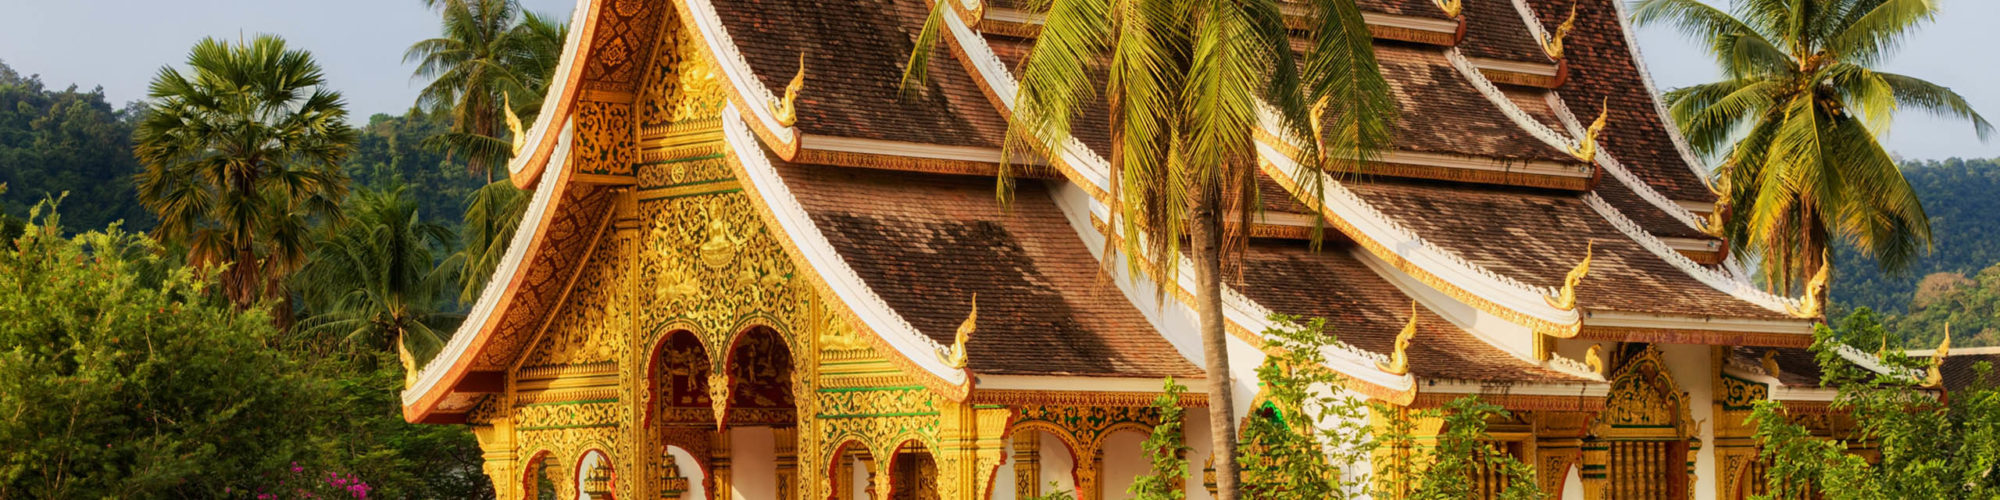 Laos travel agents packages deals